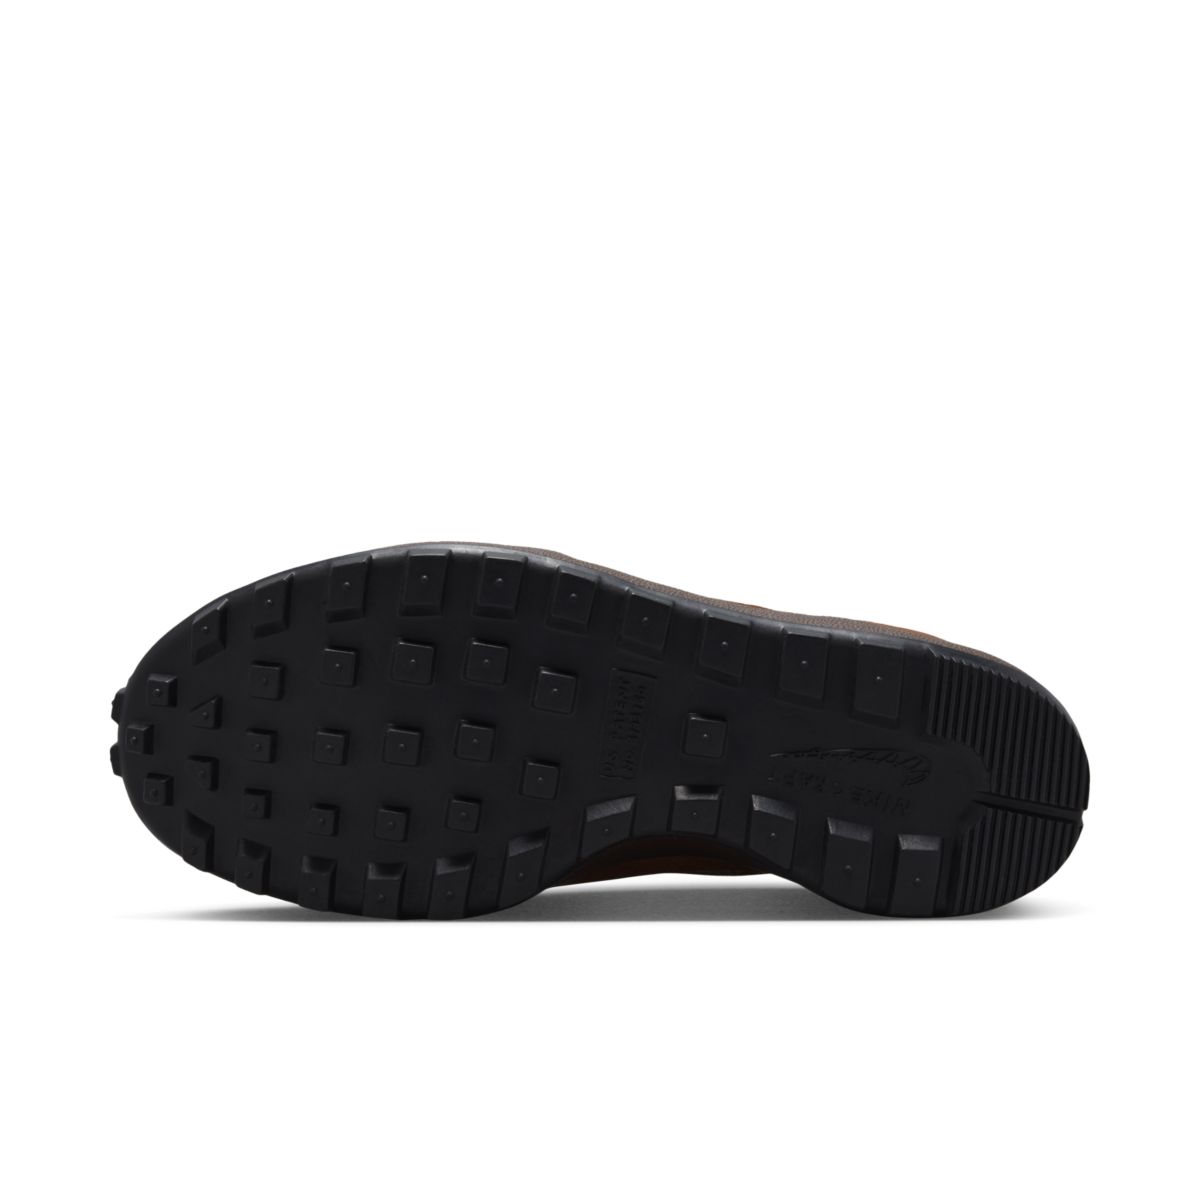 Tom Sachs x NikeCraft General Purpose Shoe Brown DA6672-201 1